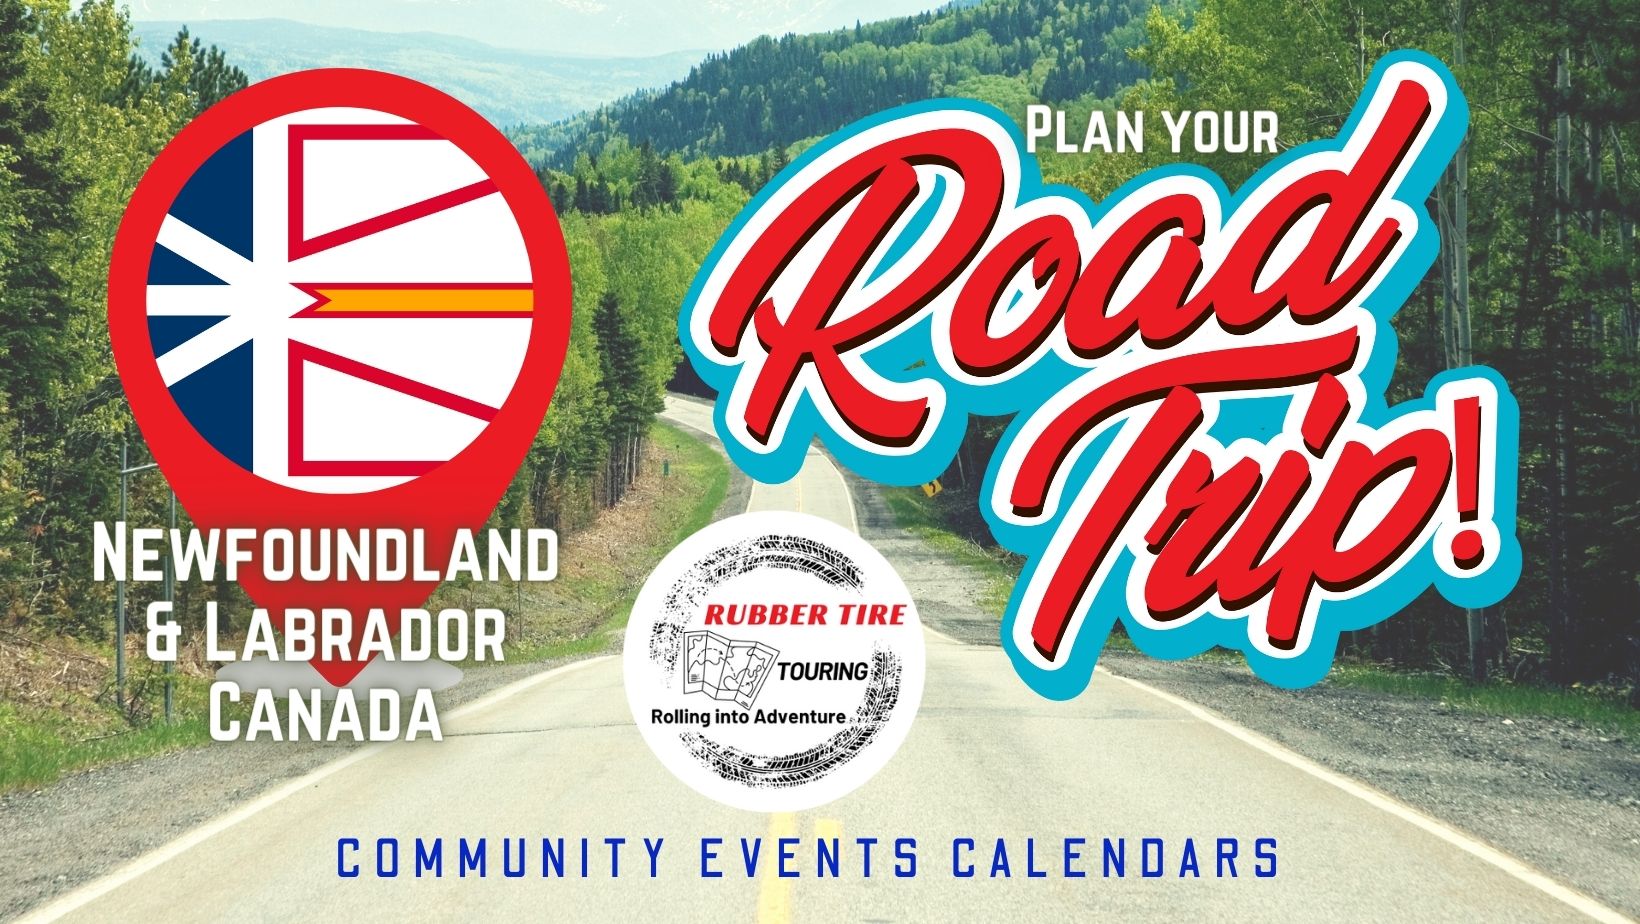 NL Events Calendar - Plan your road trip!